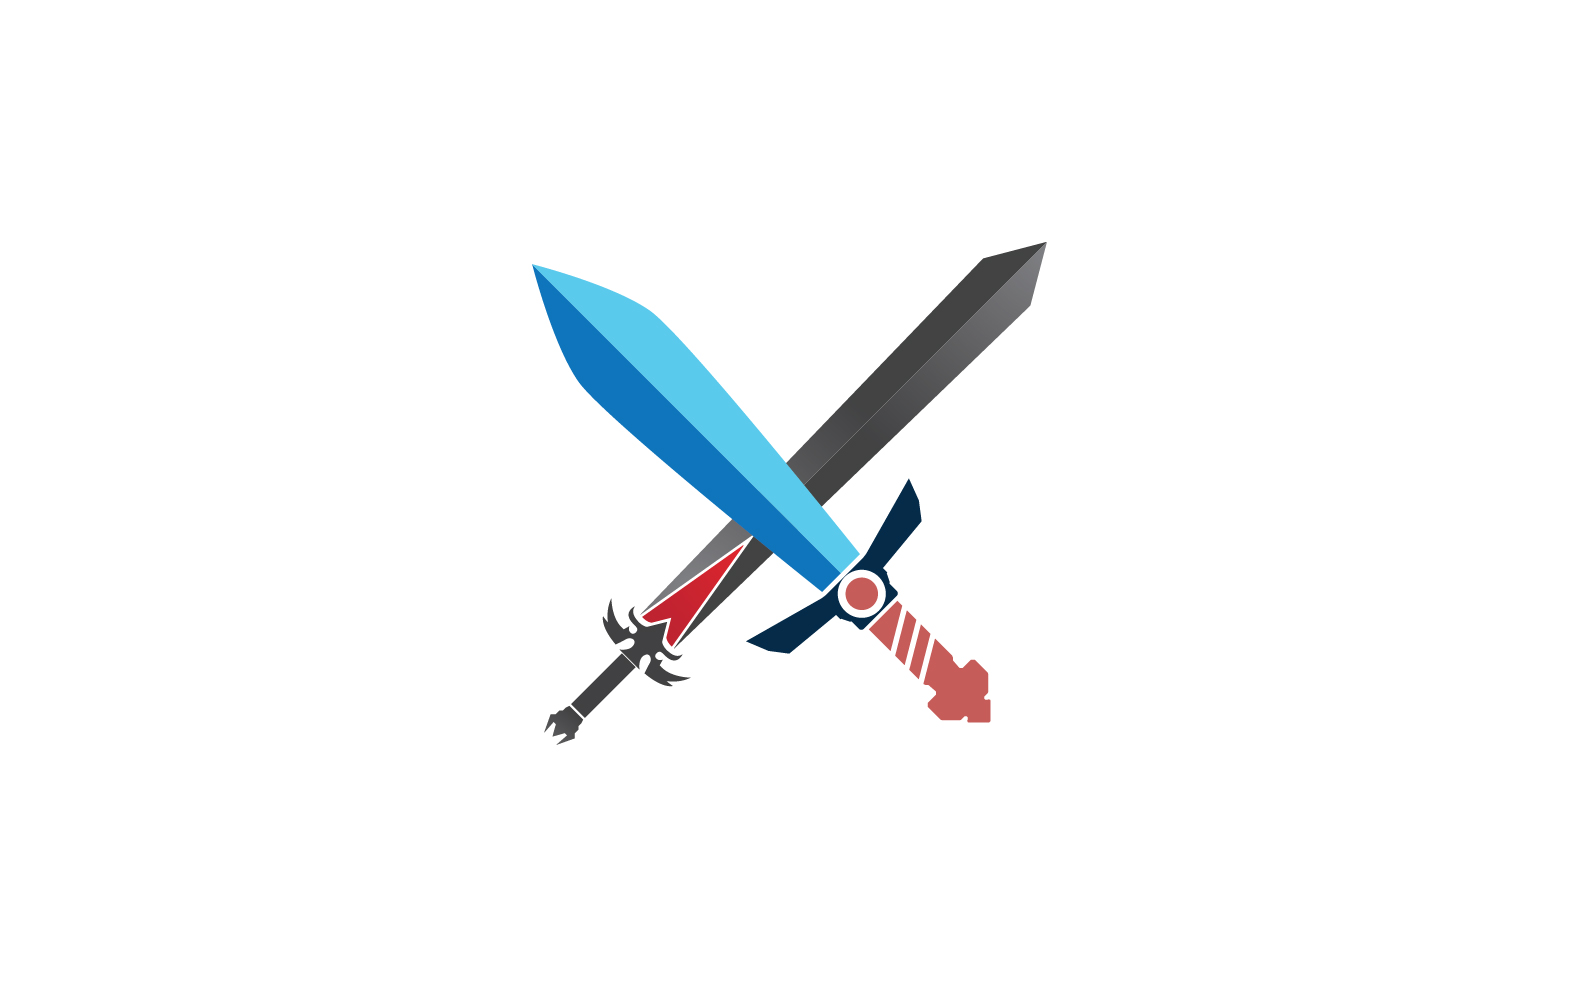 Sword item collection in game vector design v16